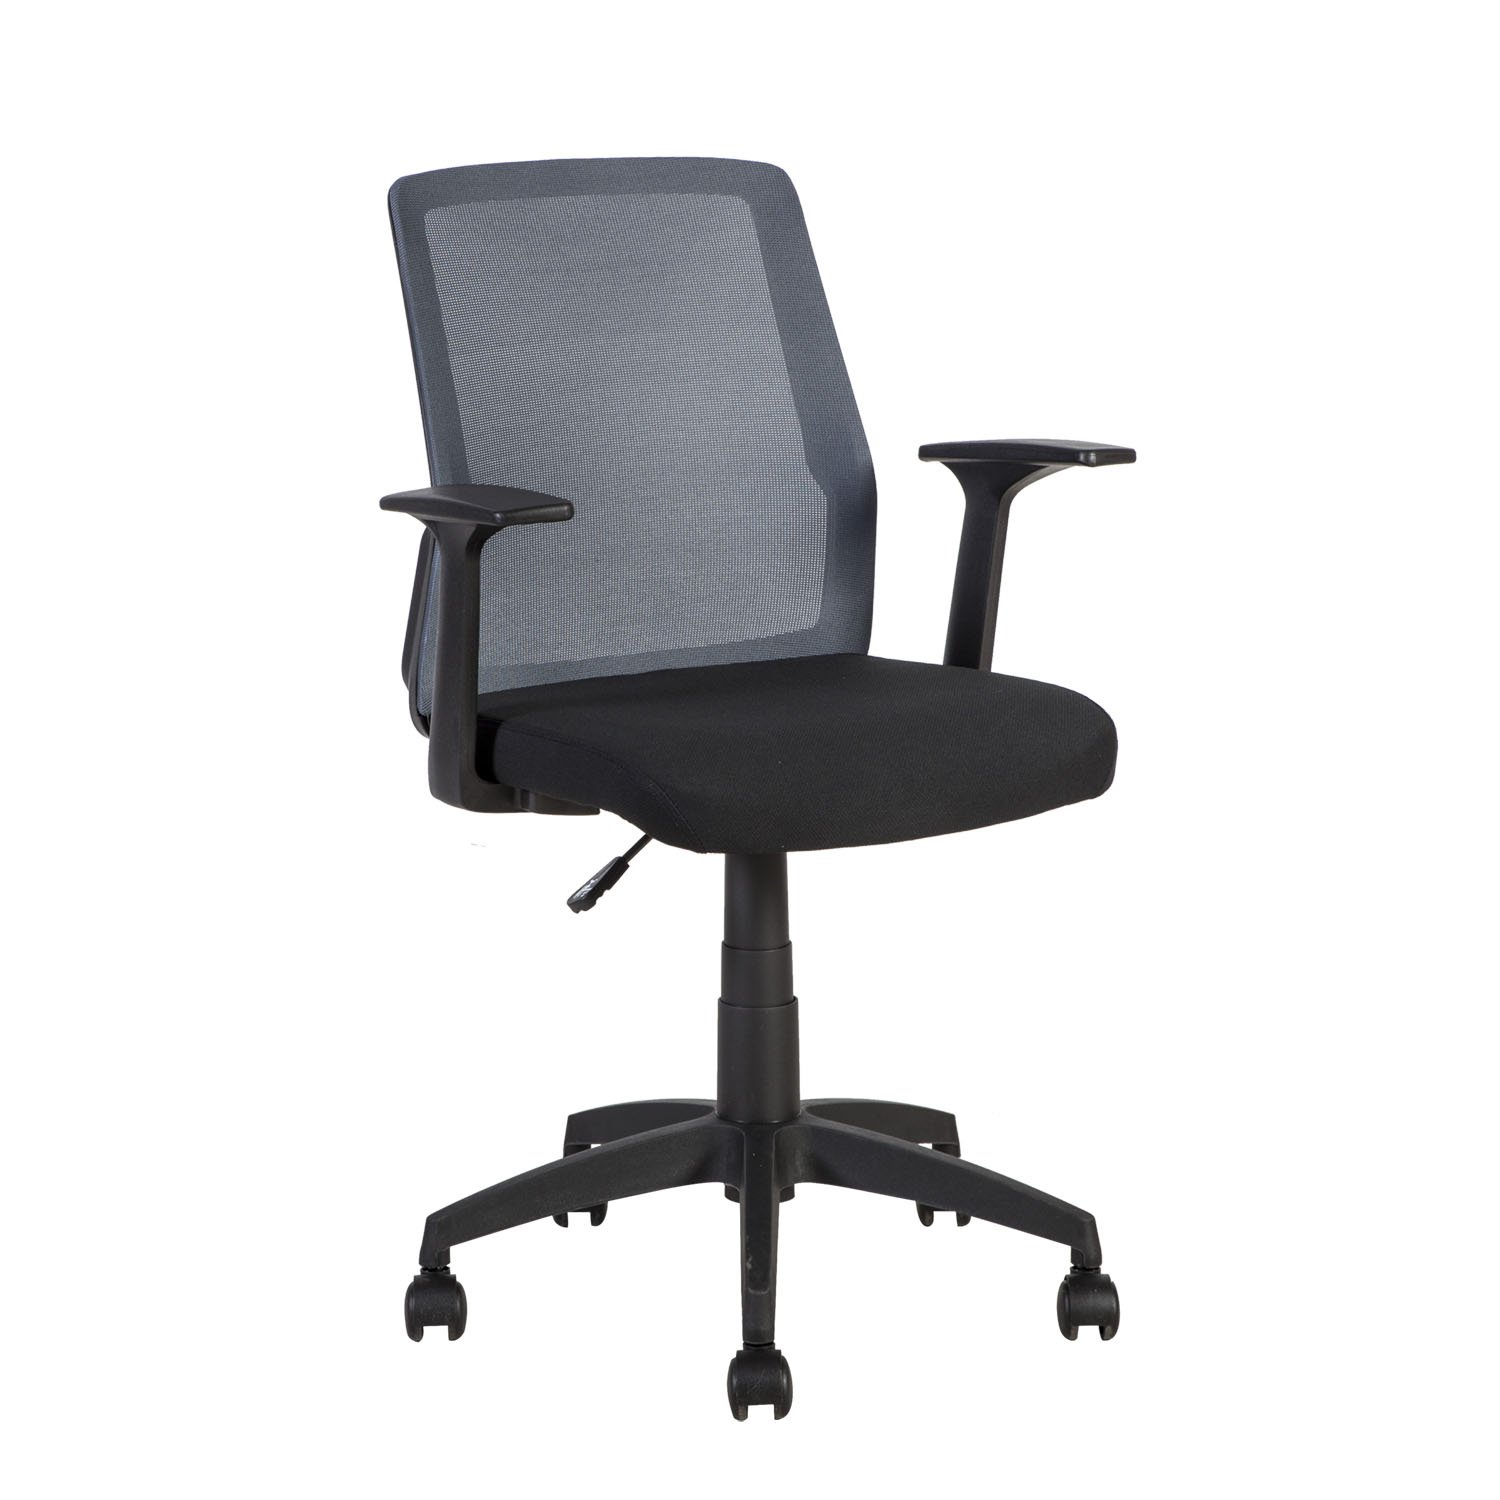 Biuro kėdė ALPHA, 60x55x87,5-95 cm, juoda/pilka